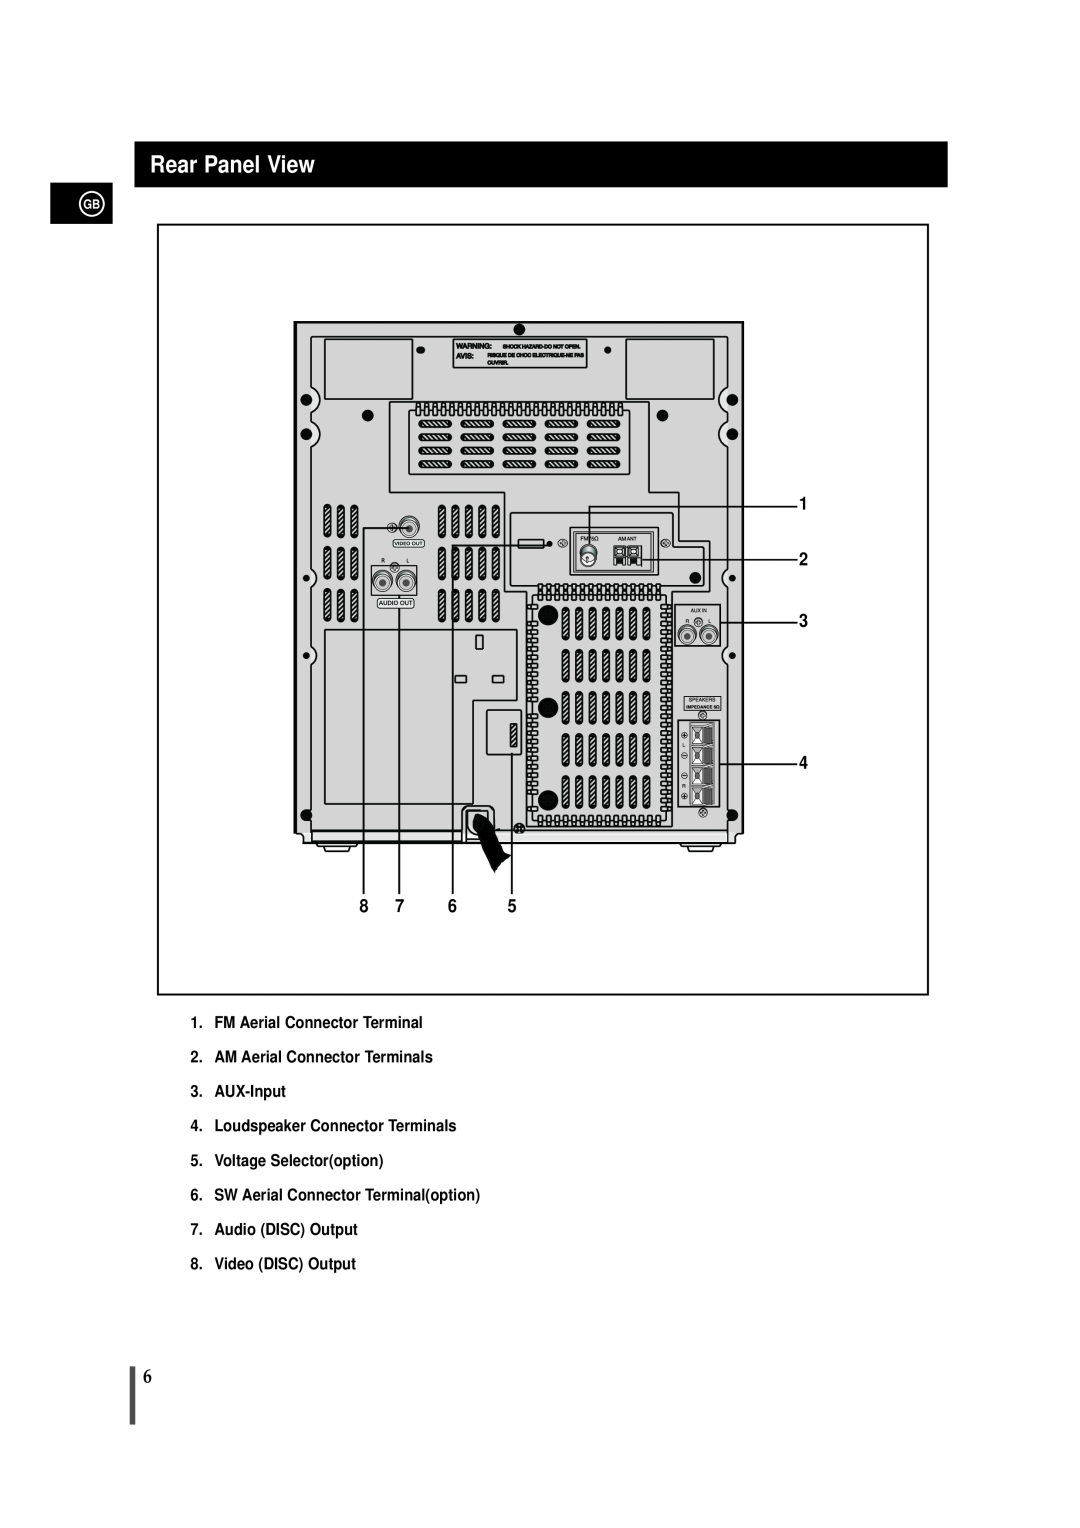 Samsung MAX-VB450 Rear Panel View, FM Aerial Connector Terminal, AM Aerial Connector Terminals 3.AUX-Input 